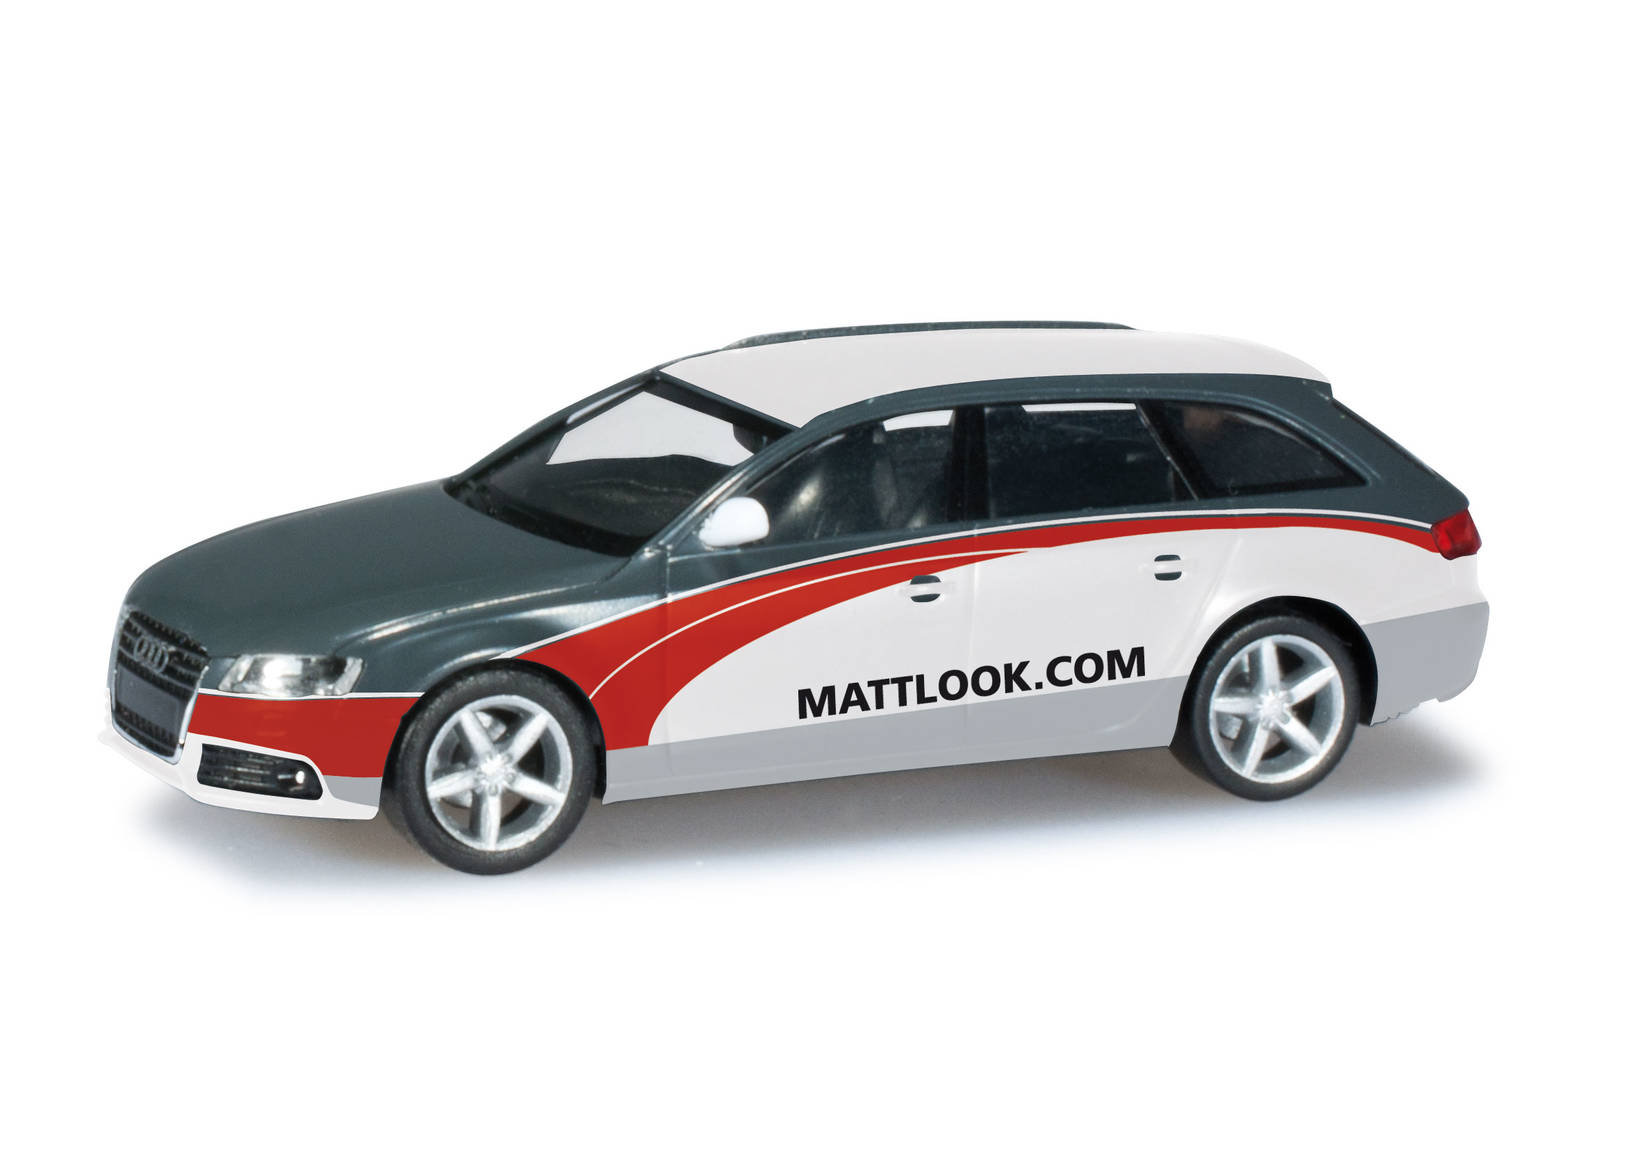 Audi A4 Avant "SignalReklame / mattlook.com"